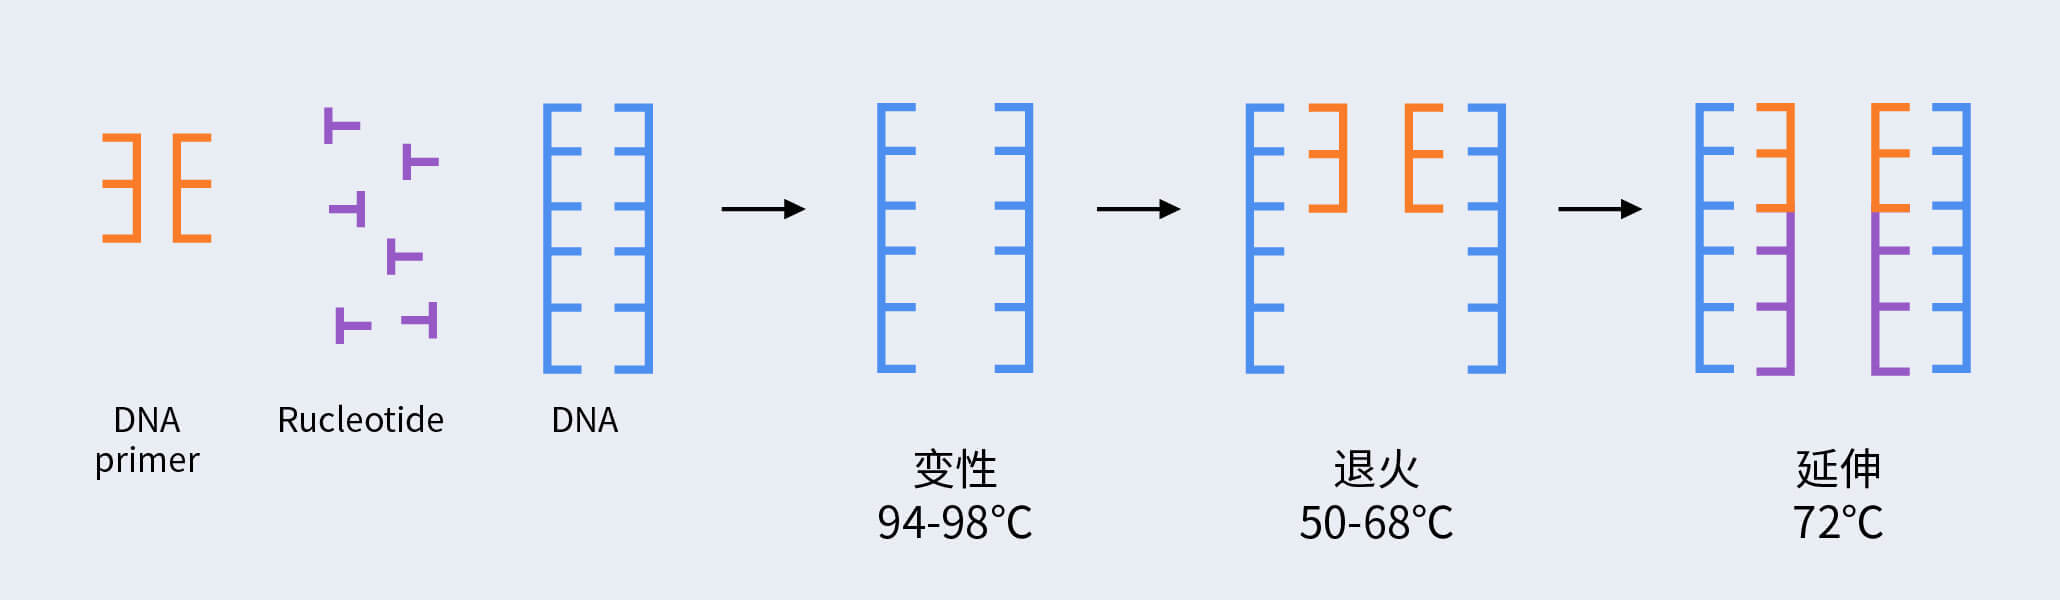 PCR扩增流程